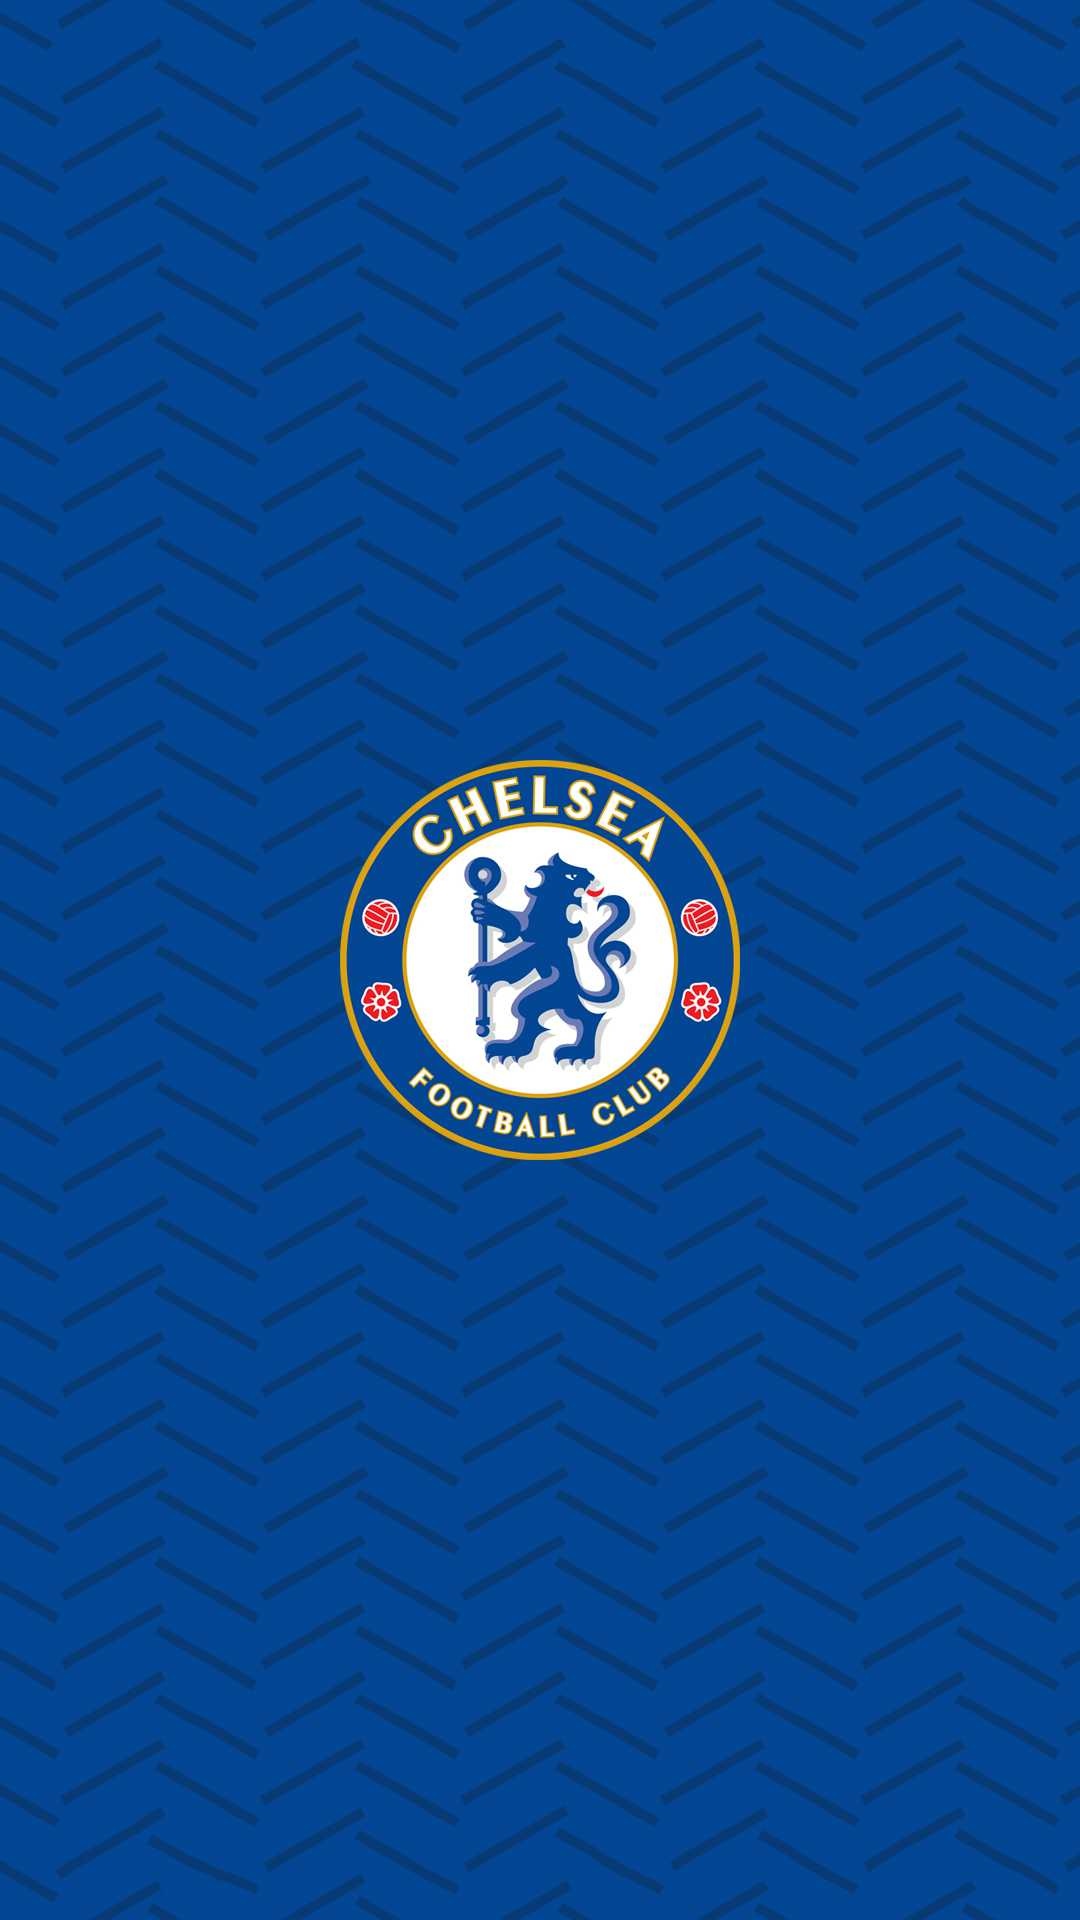 Chelsea: First UEFA Europa League title, 2013, Soccer. 1080x1920 Full HD Wallpaper.